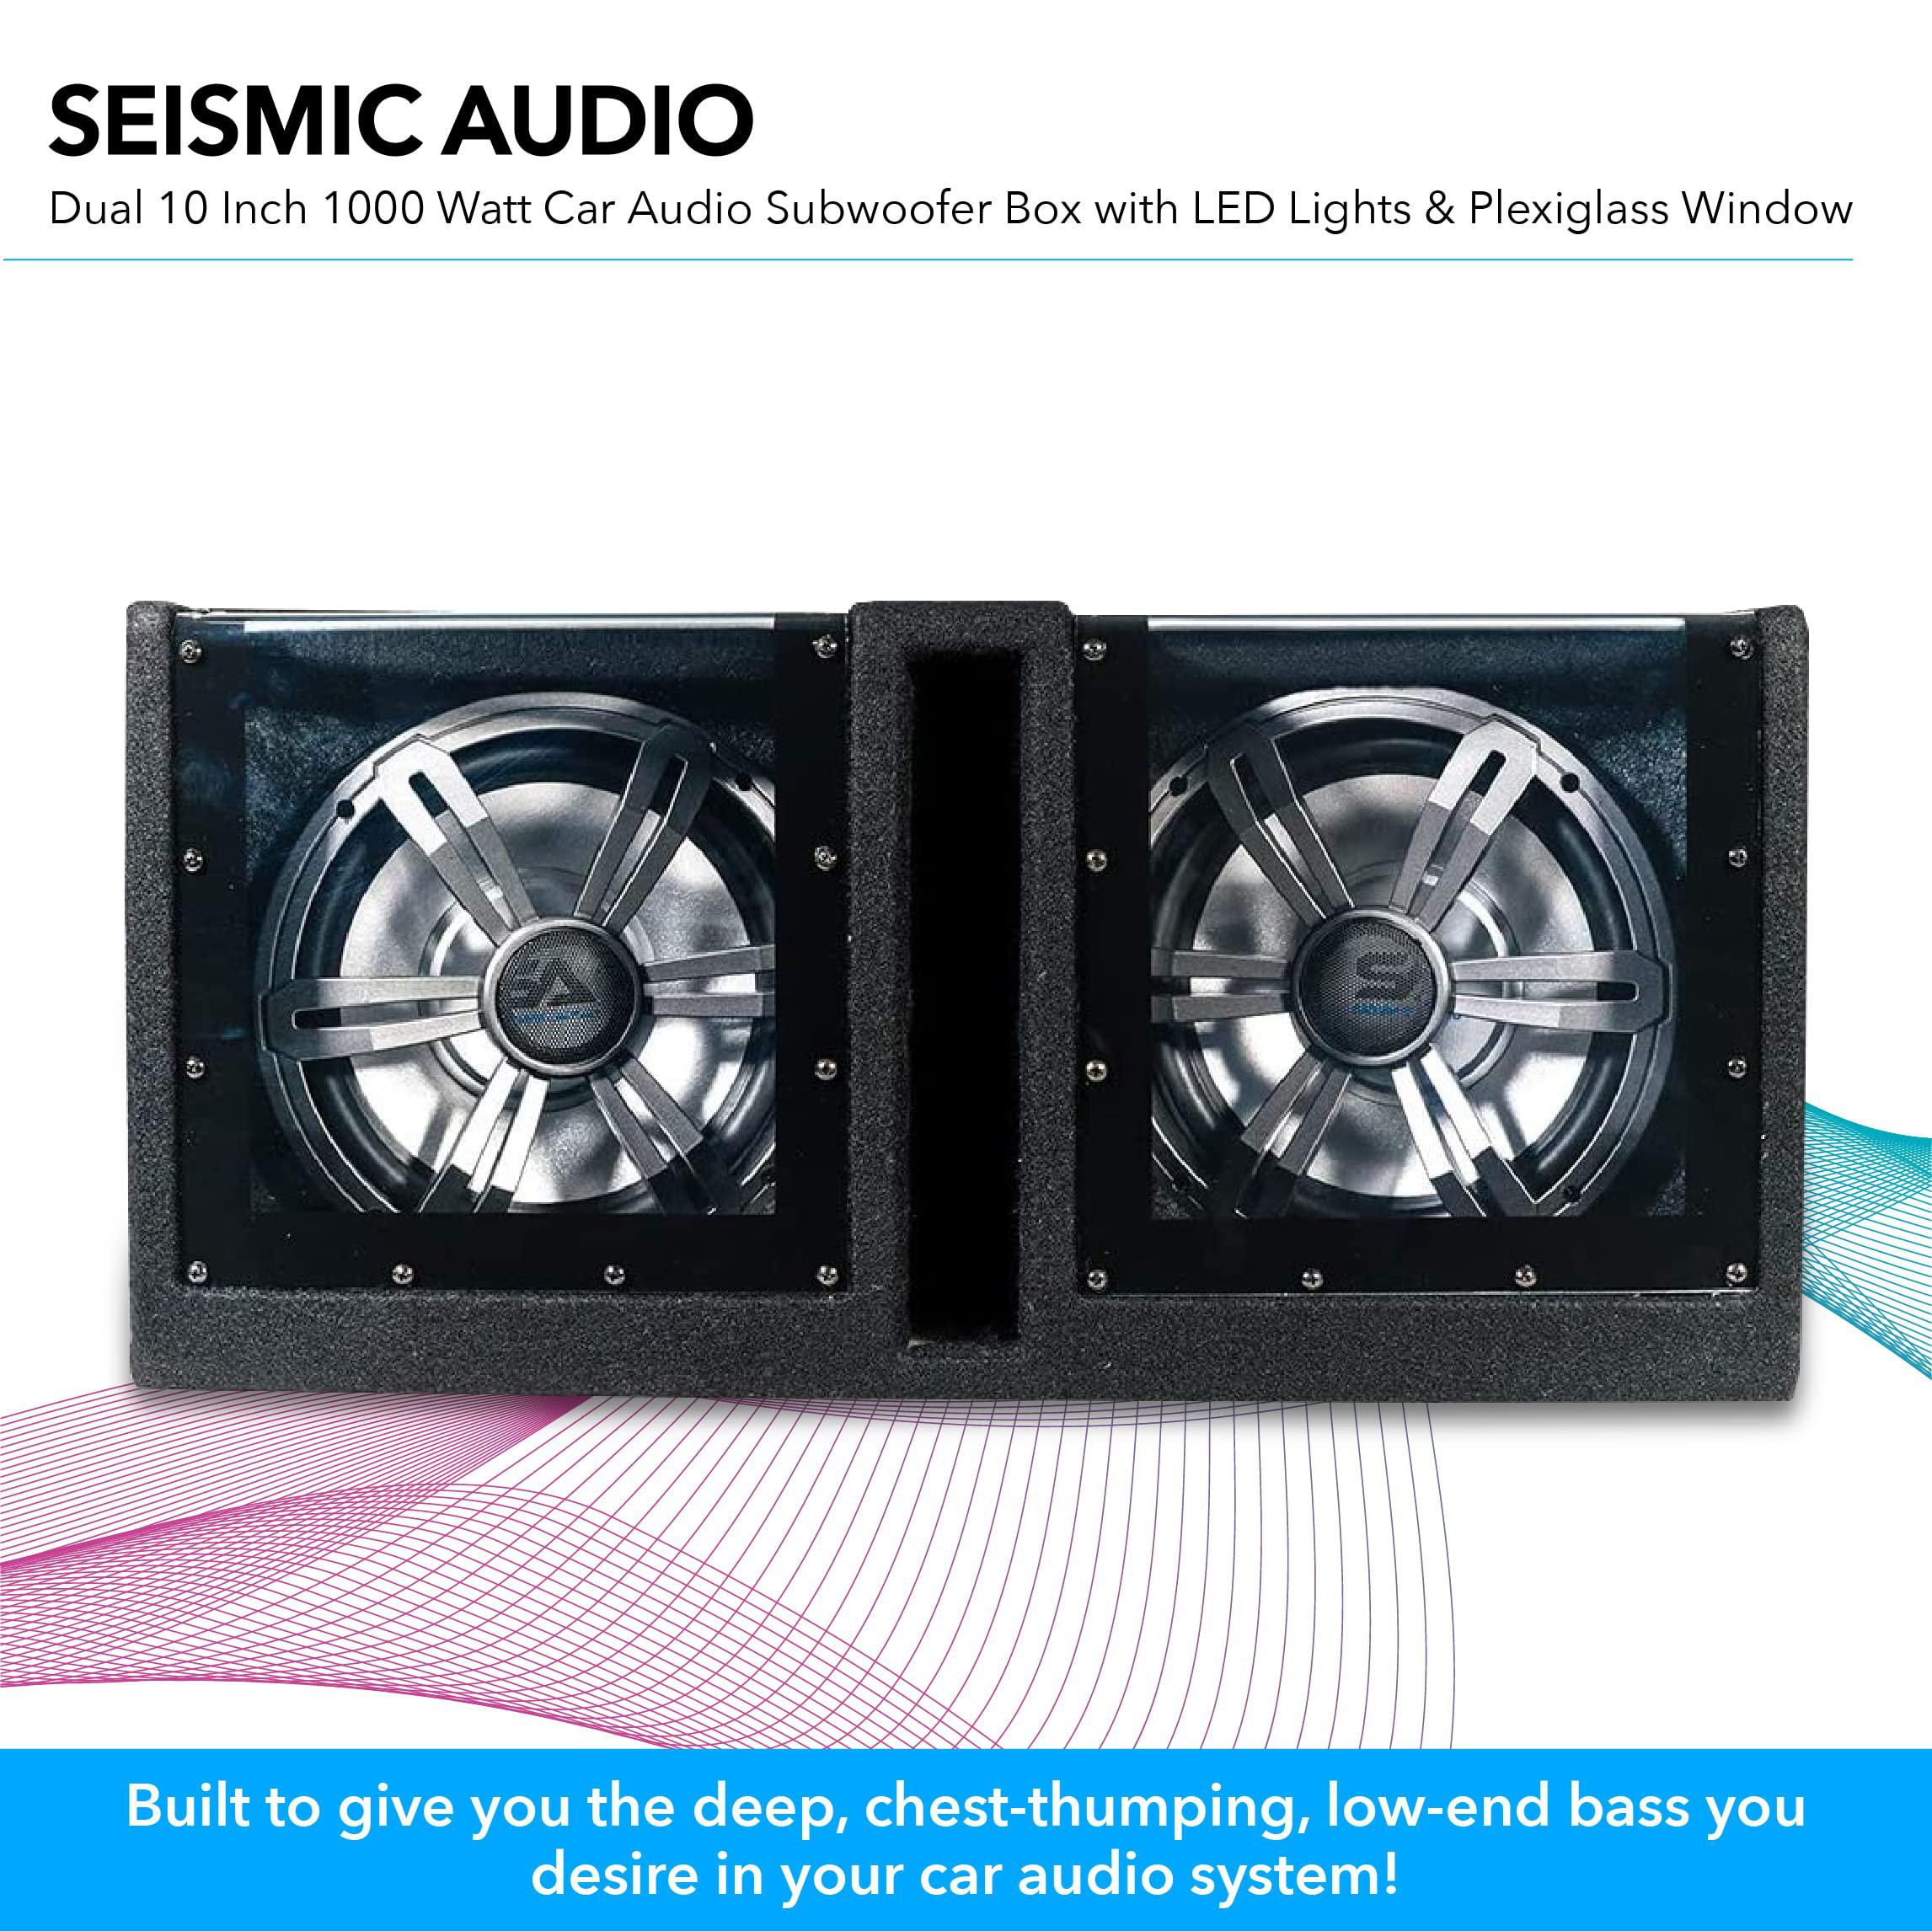 seismic audio - sa-pgsv10led - dual 10 inch vented 1000 watt car audio subwoofer box with led lights & plexiglass window